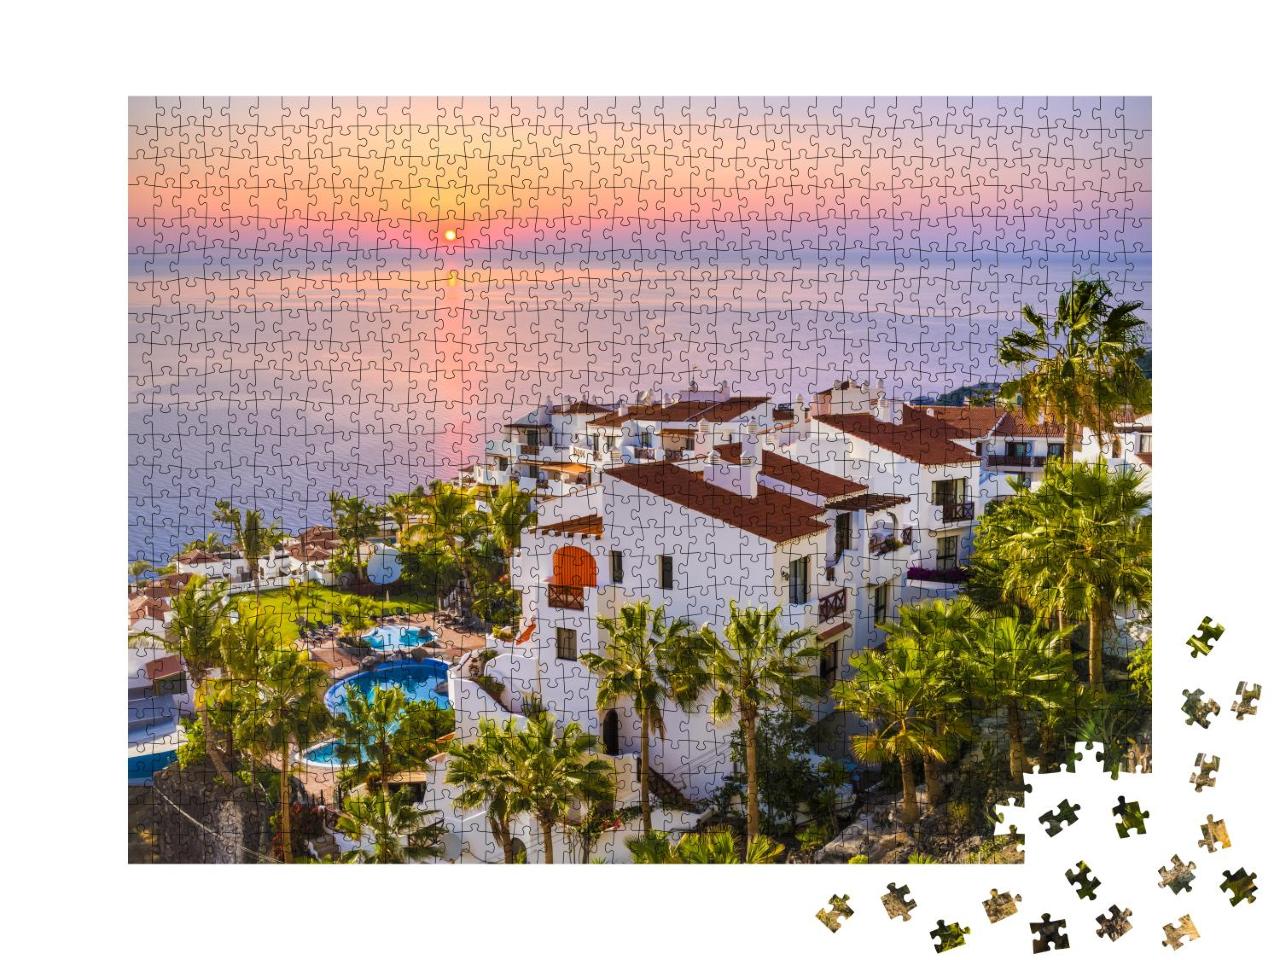 Puzzle 1000 Teile „Sonnenaufgang in Puerto de Santiago Stadt, Teneriffa“